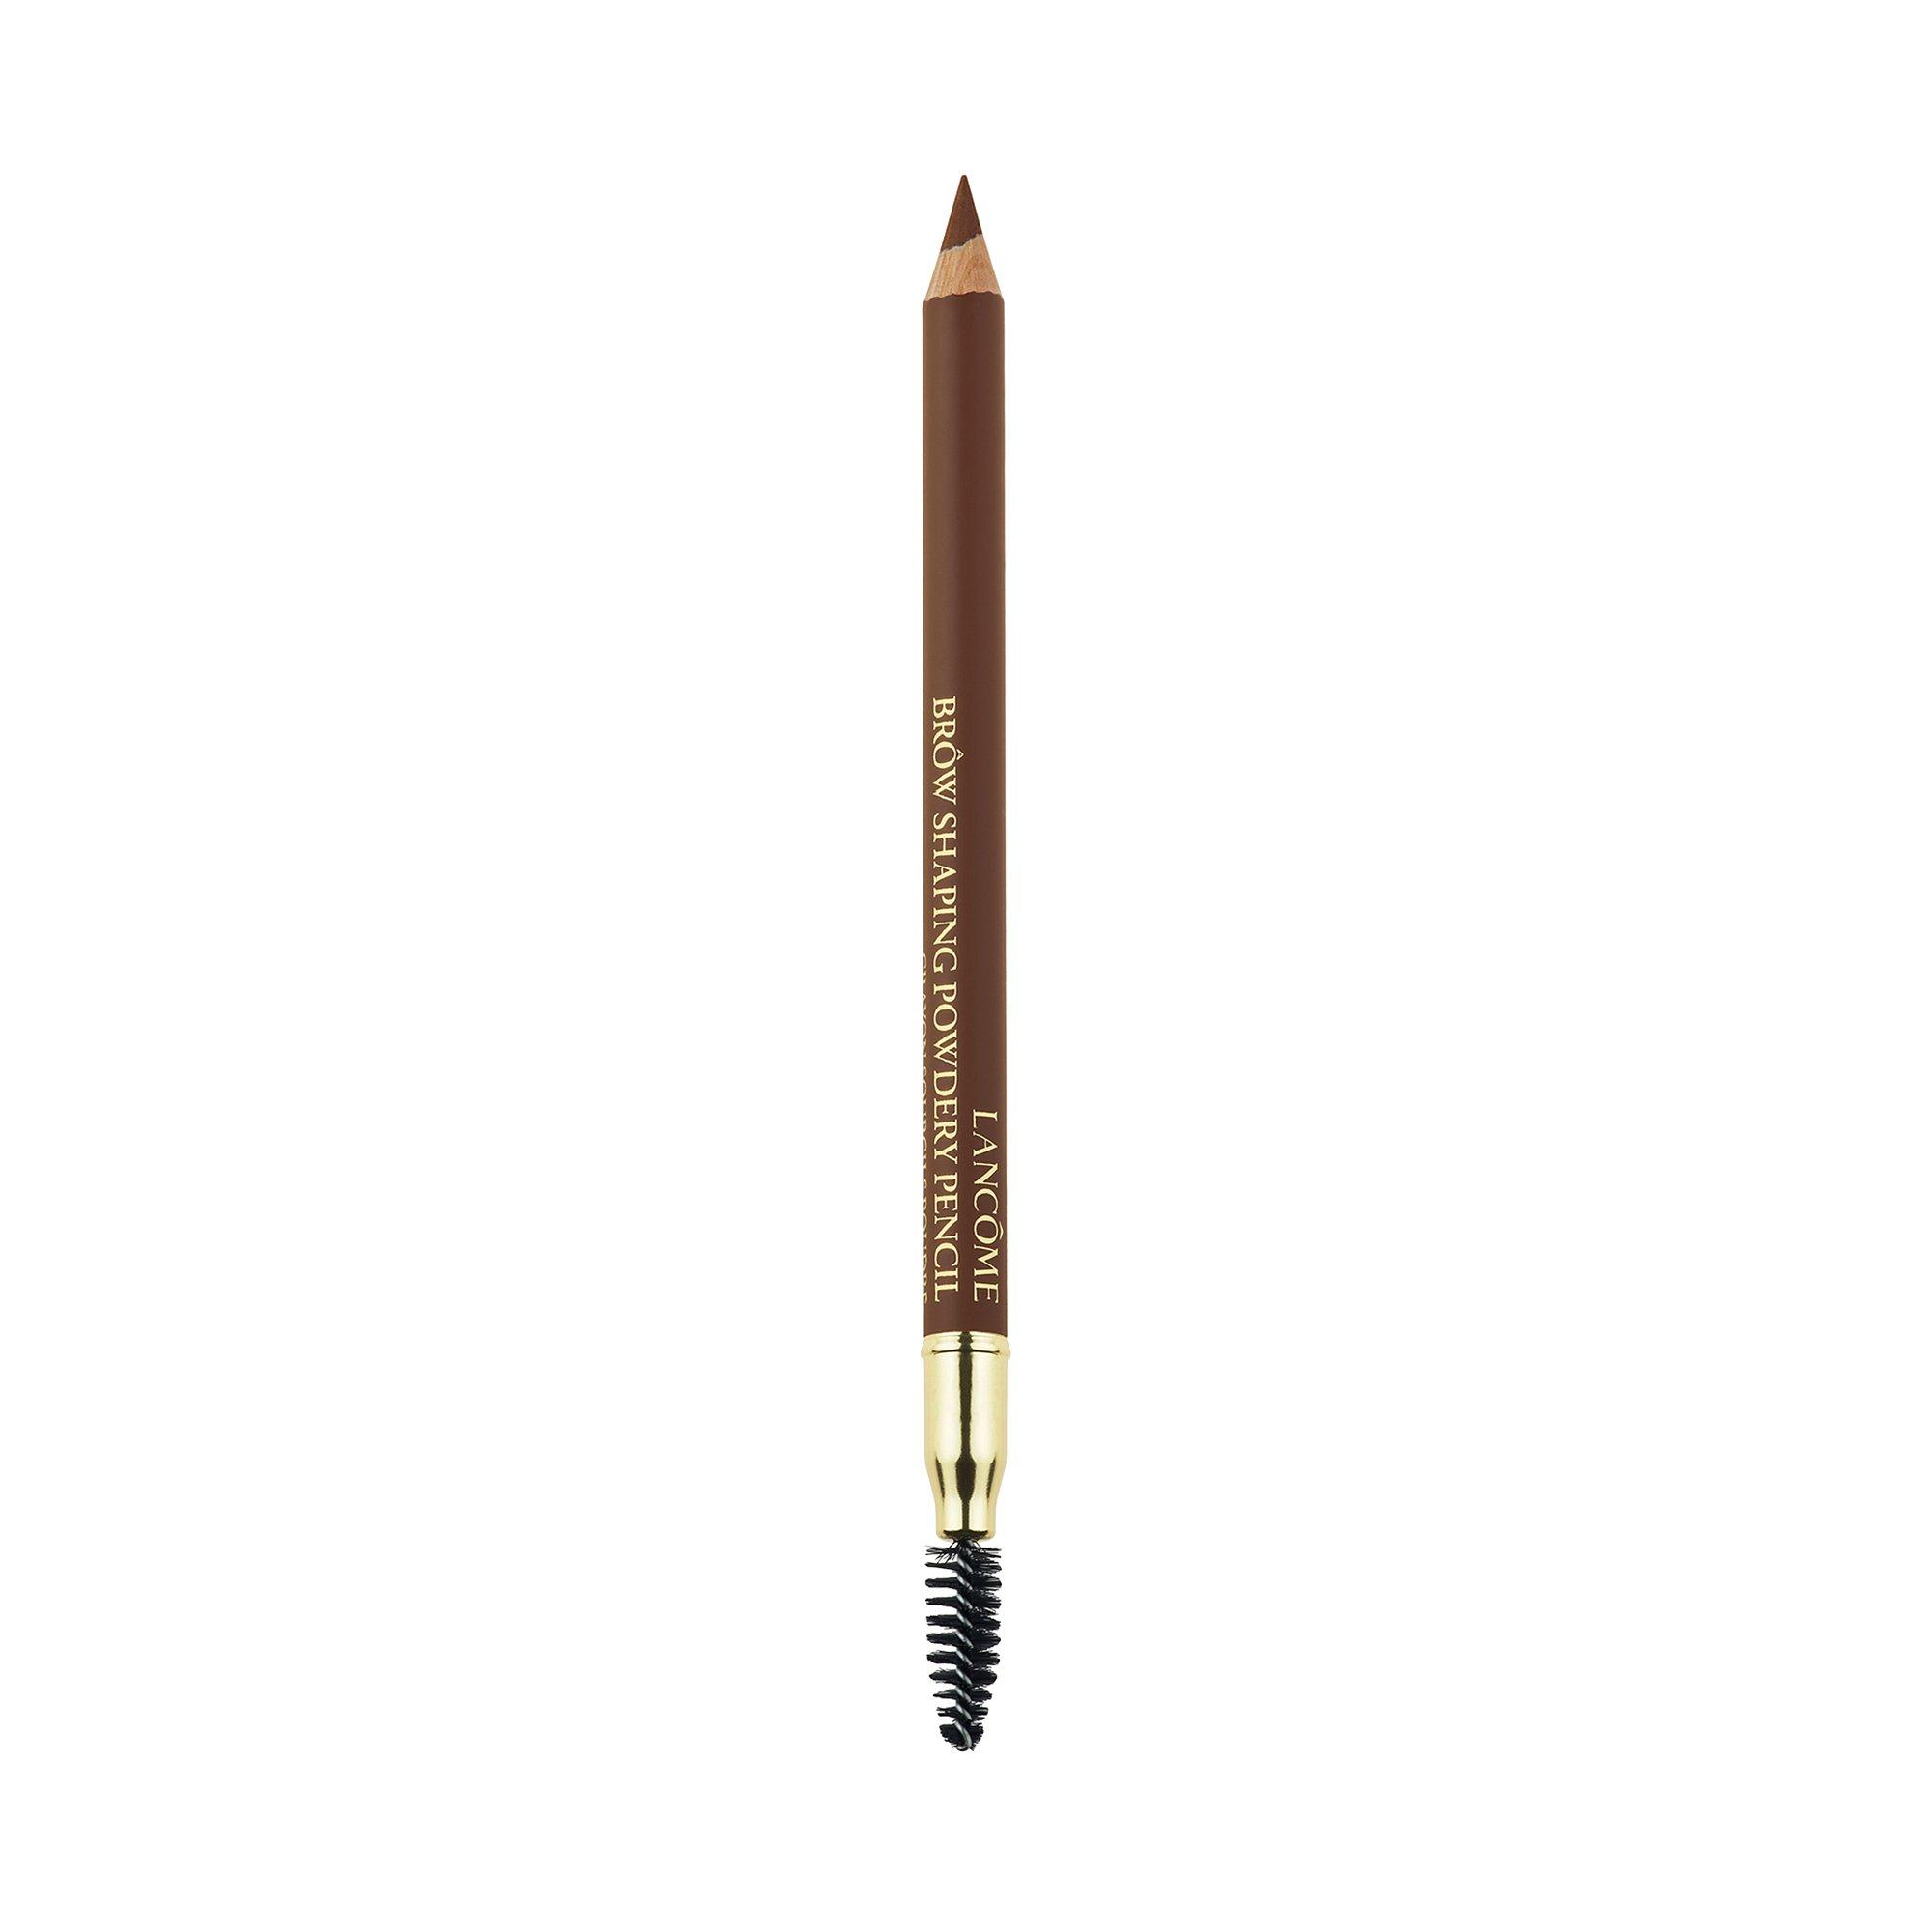 Image of Lancôme Brow Shaping Brow Shaping Powder Pencil